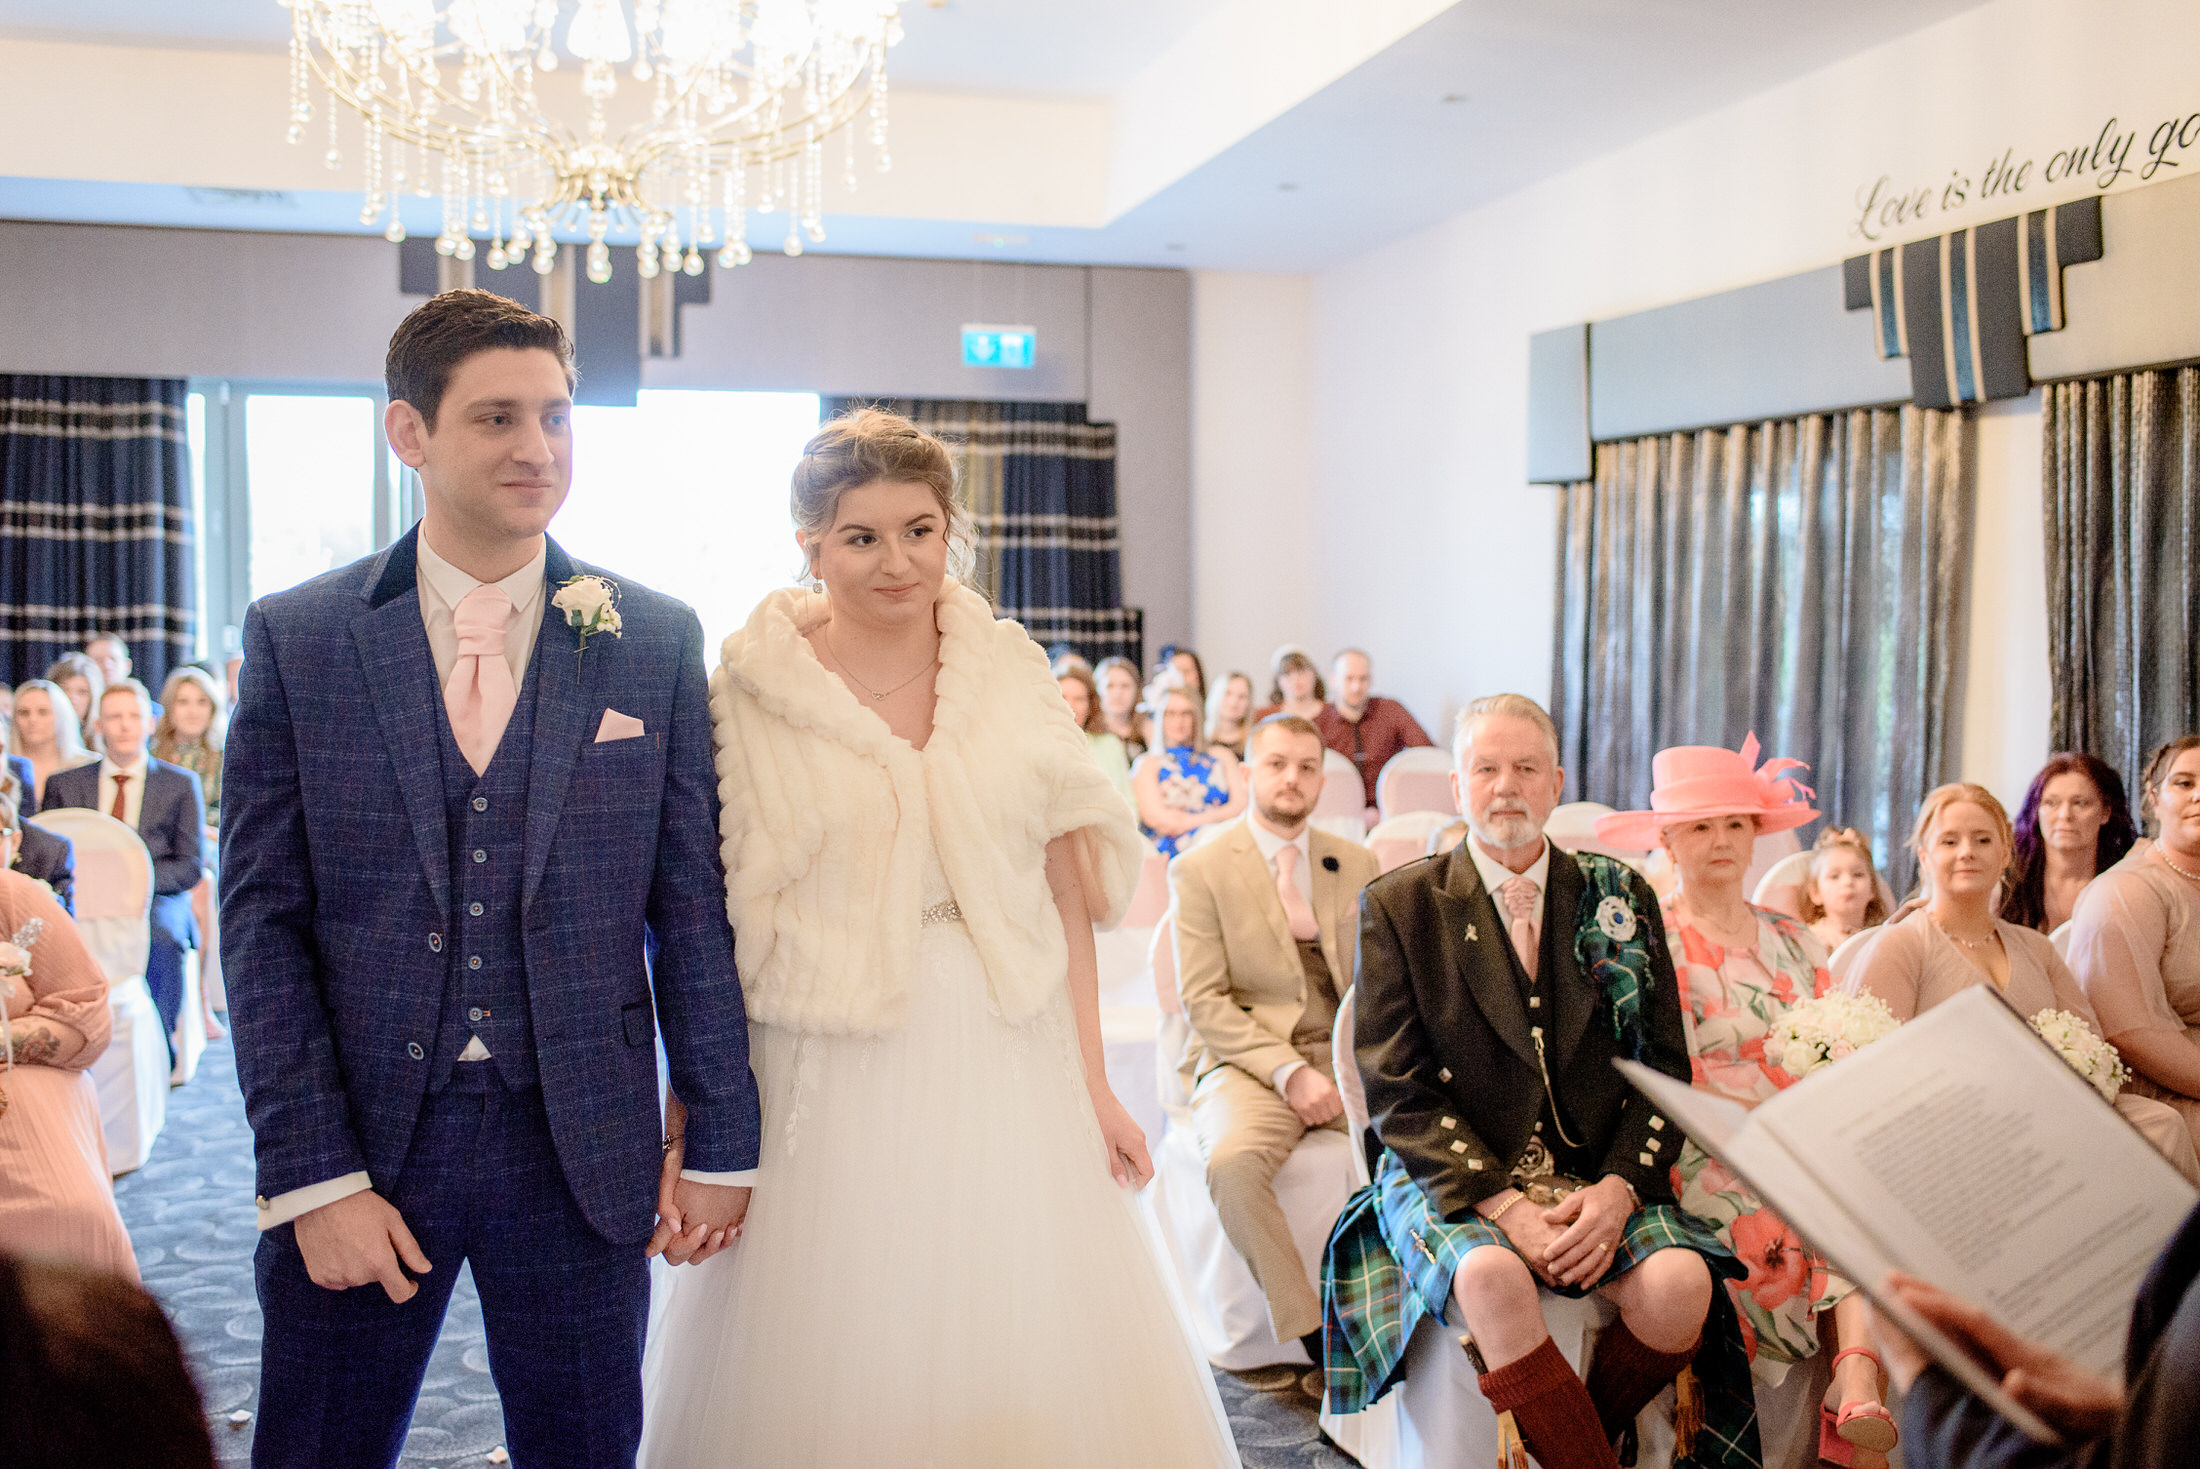 A couple, adorned in elegant attire, joyfully strolls down the aisle of the Brackenborough Hotel during their beautiful wedding ceremony.